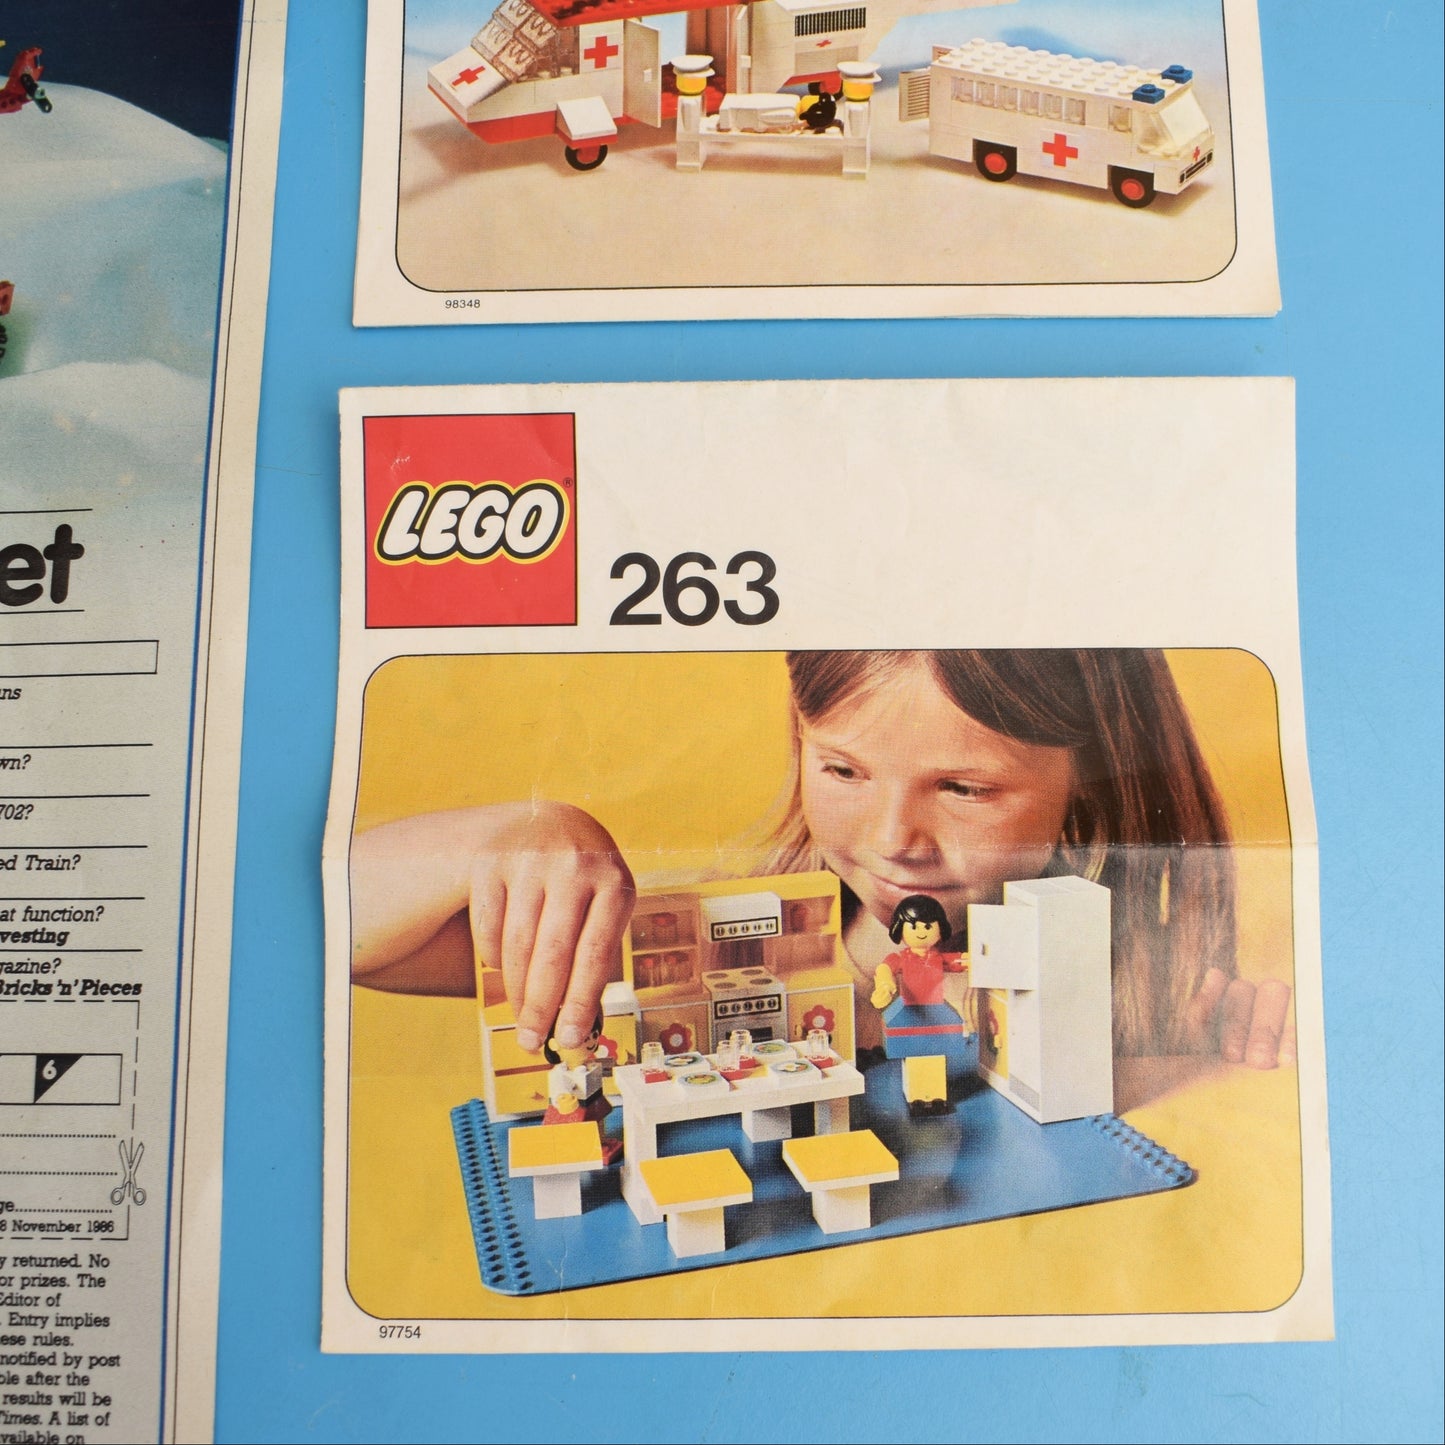 Vintage 1970s/ 80s Lego Advertising